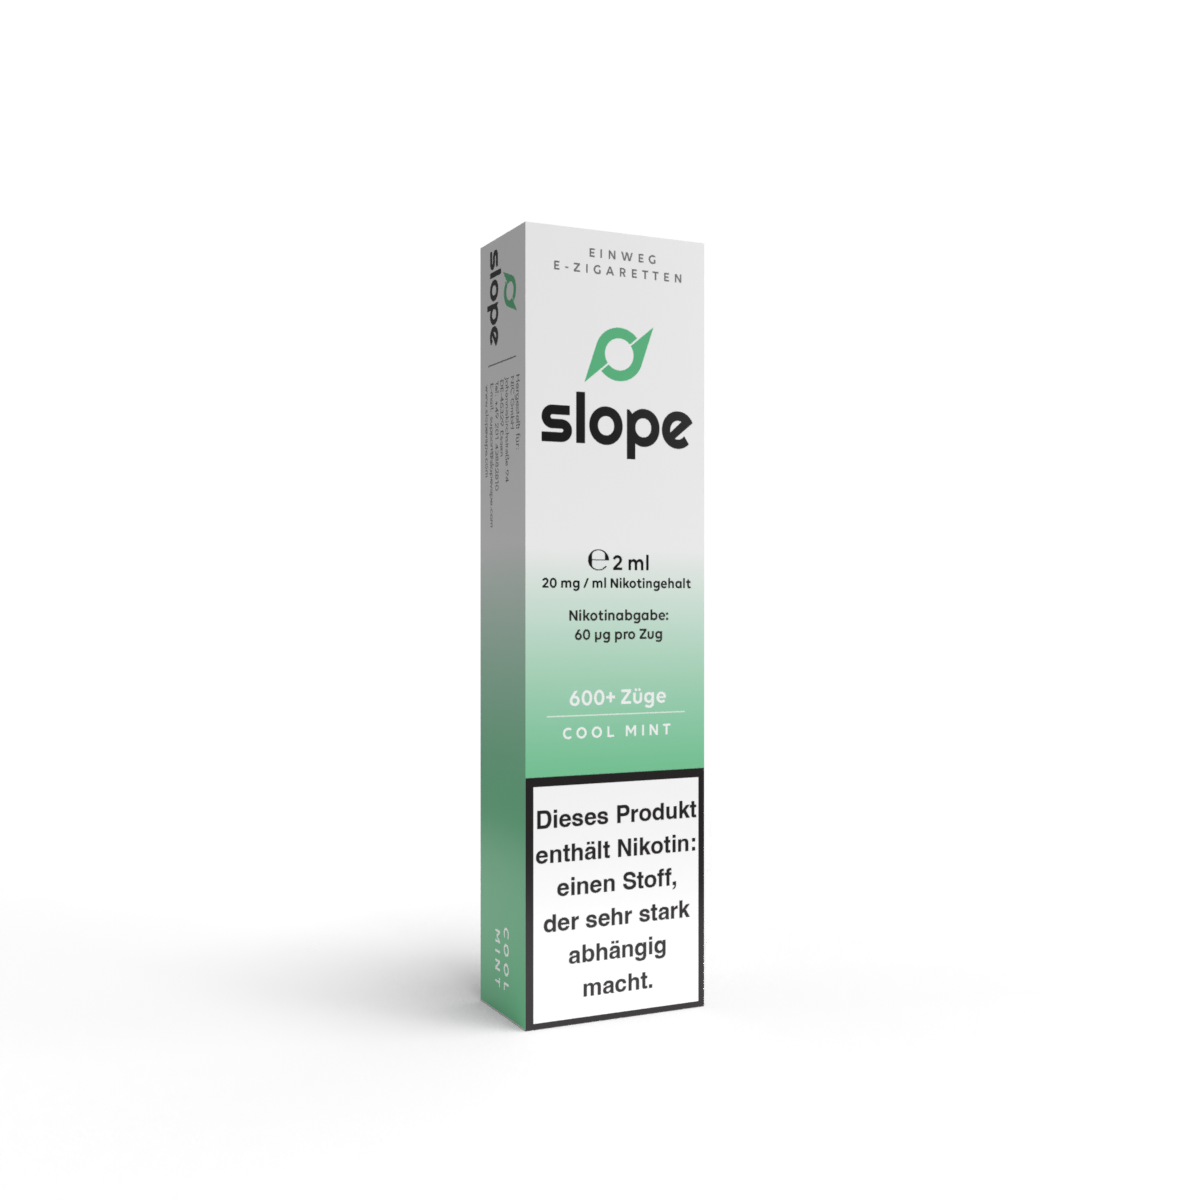 SLOPE Einweg E Zigarette 20mg/ml - Vape Stick - Cool Mint